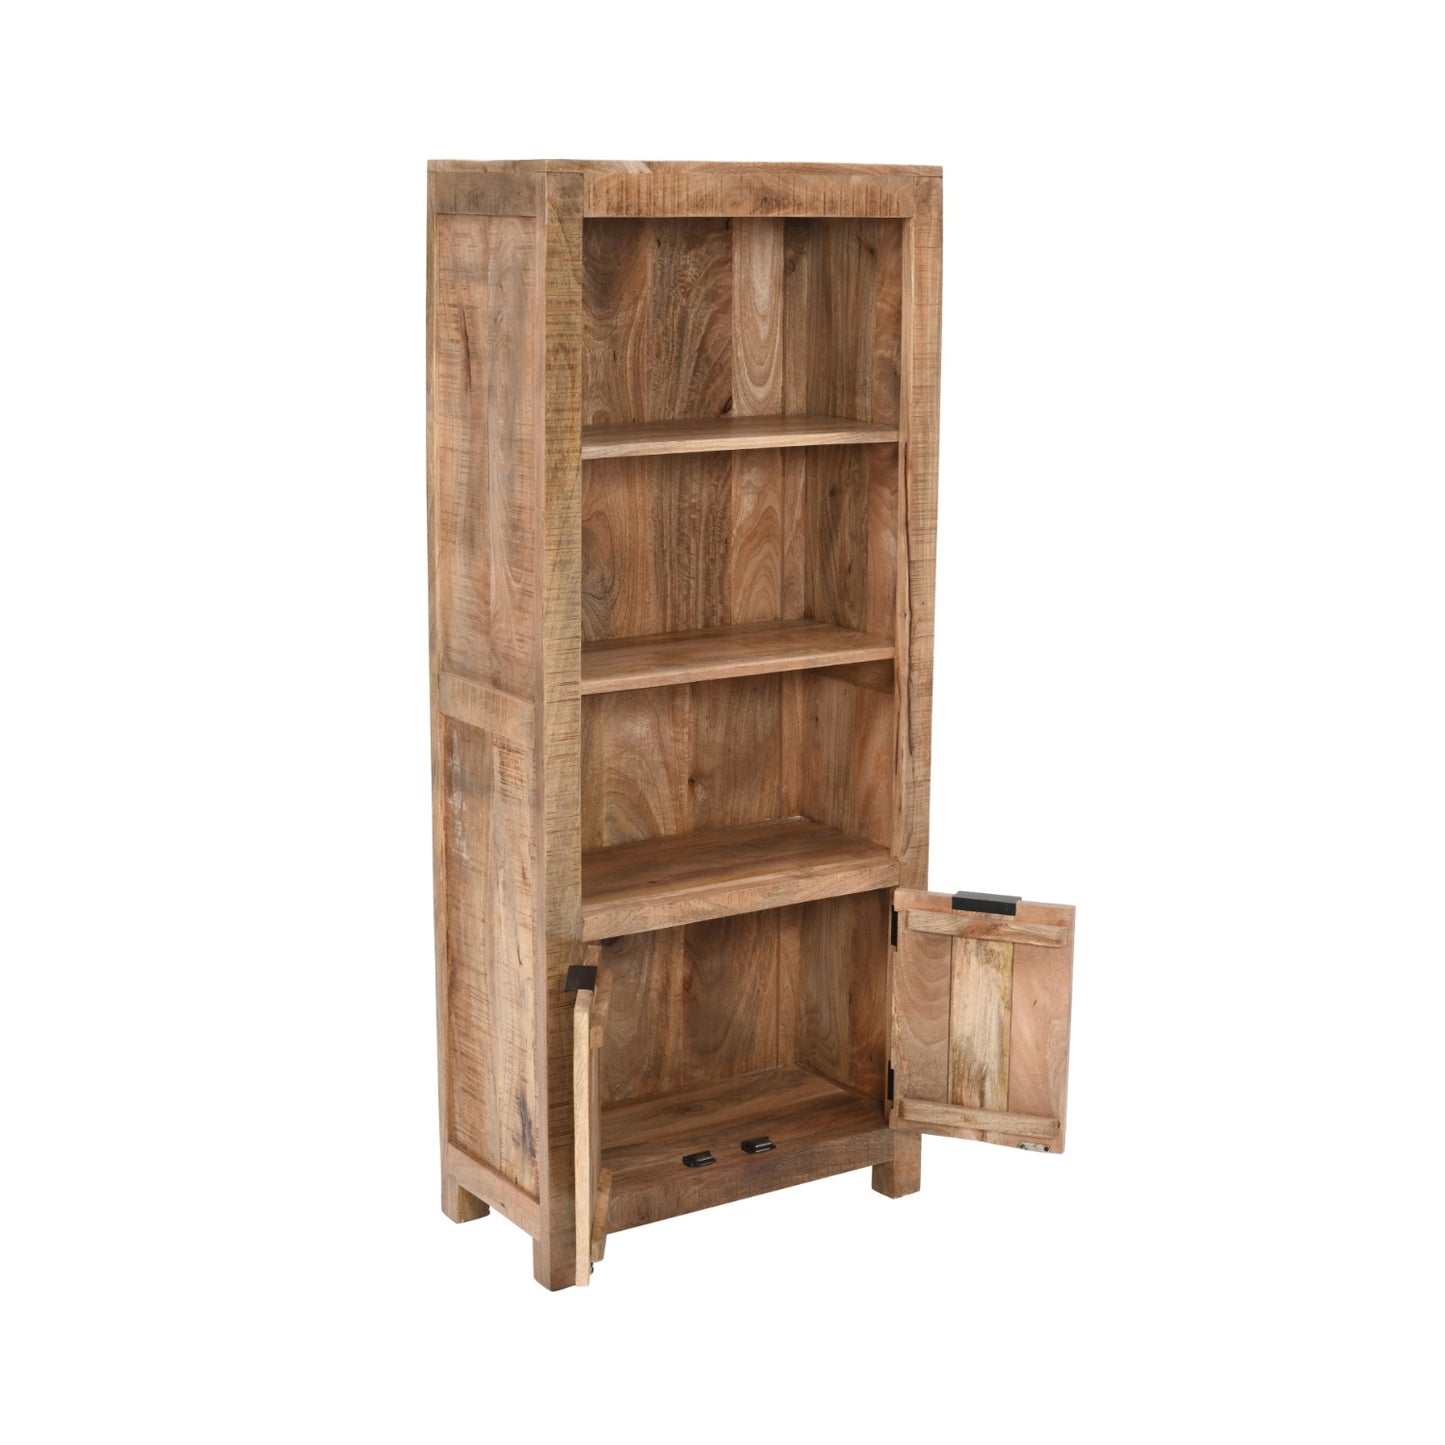 Surrey Solid Wood Bookcase With Doors